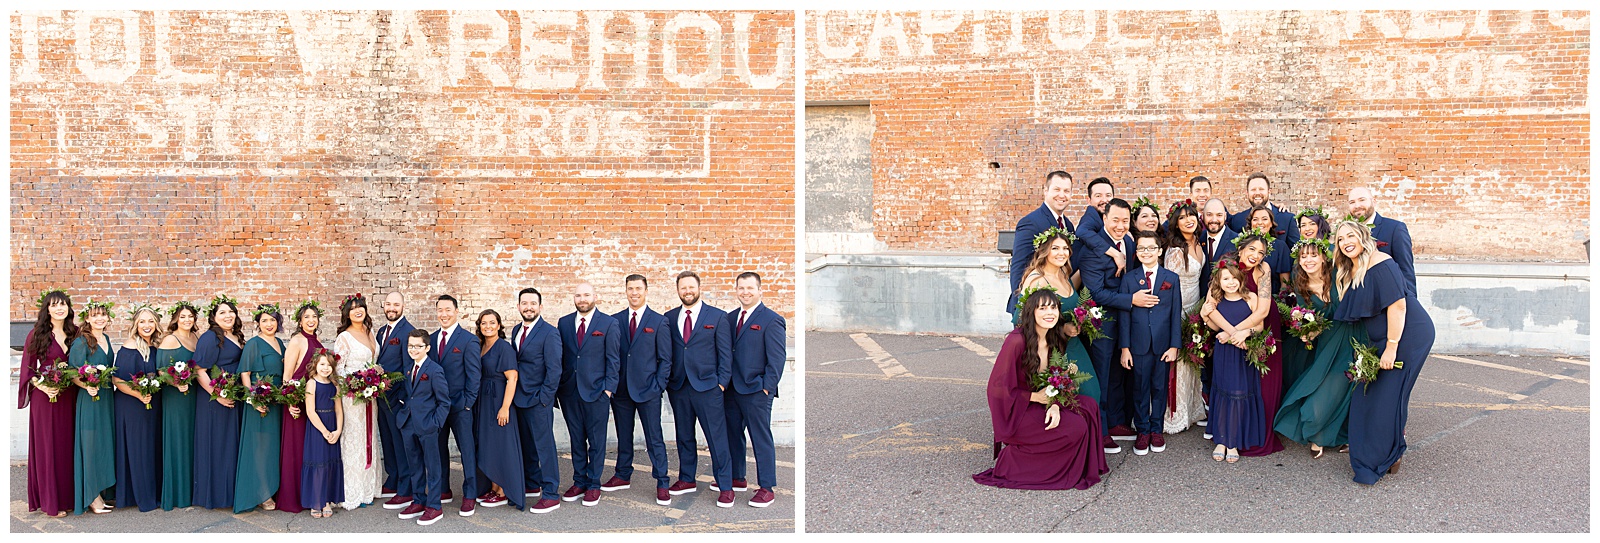 Downtown Phoenix wedding photos with jewel color scheme by riane roberts